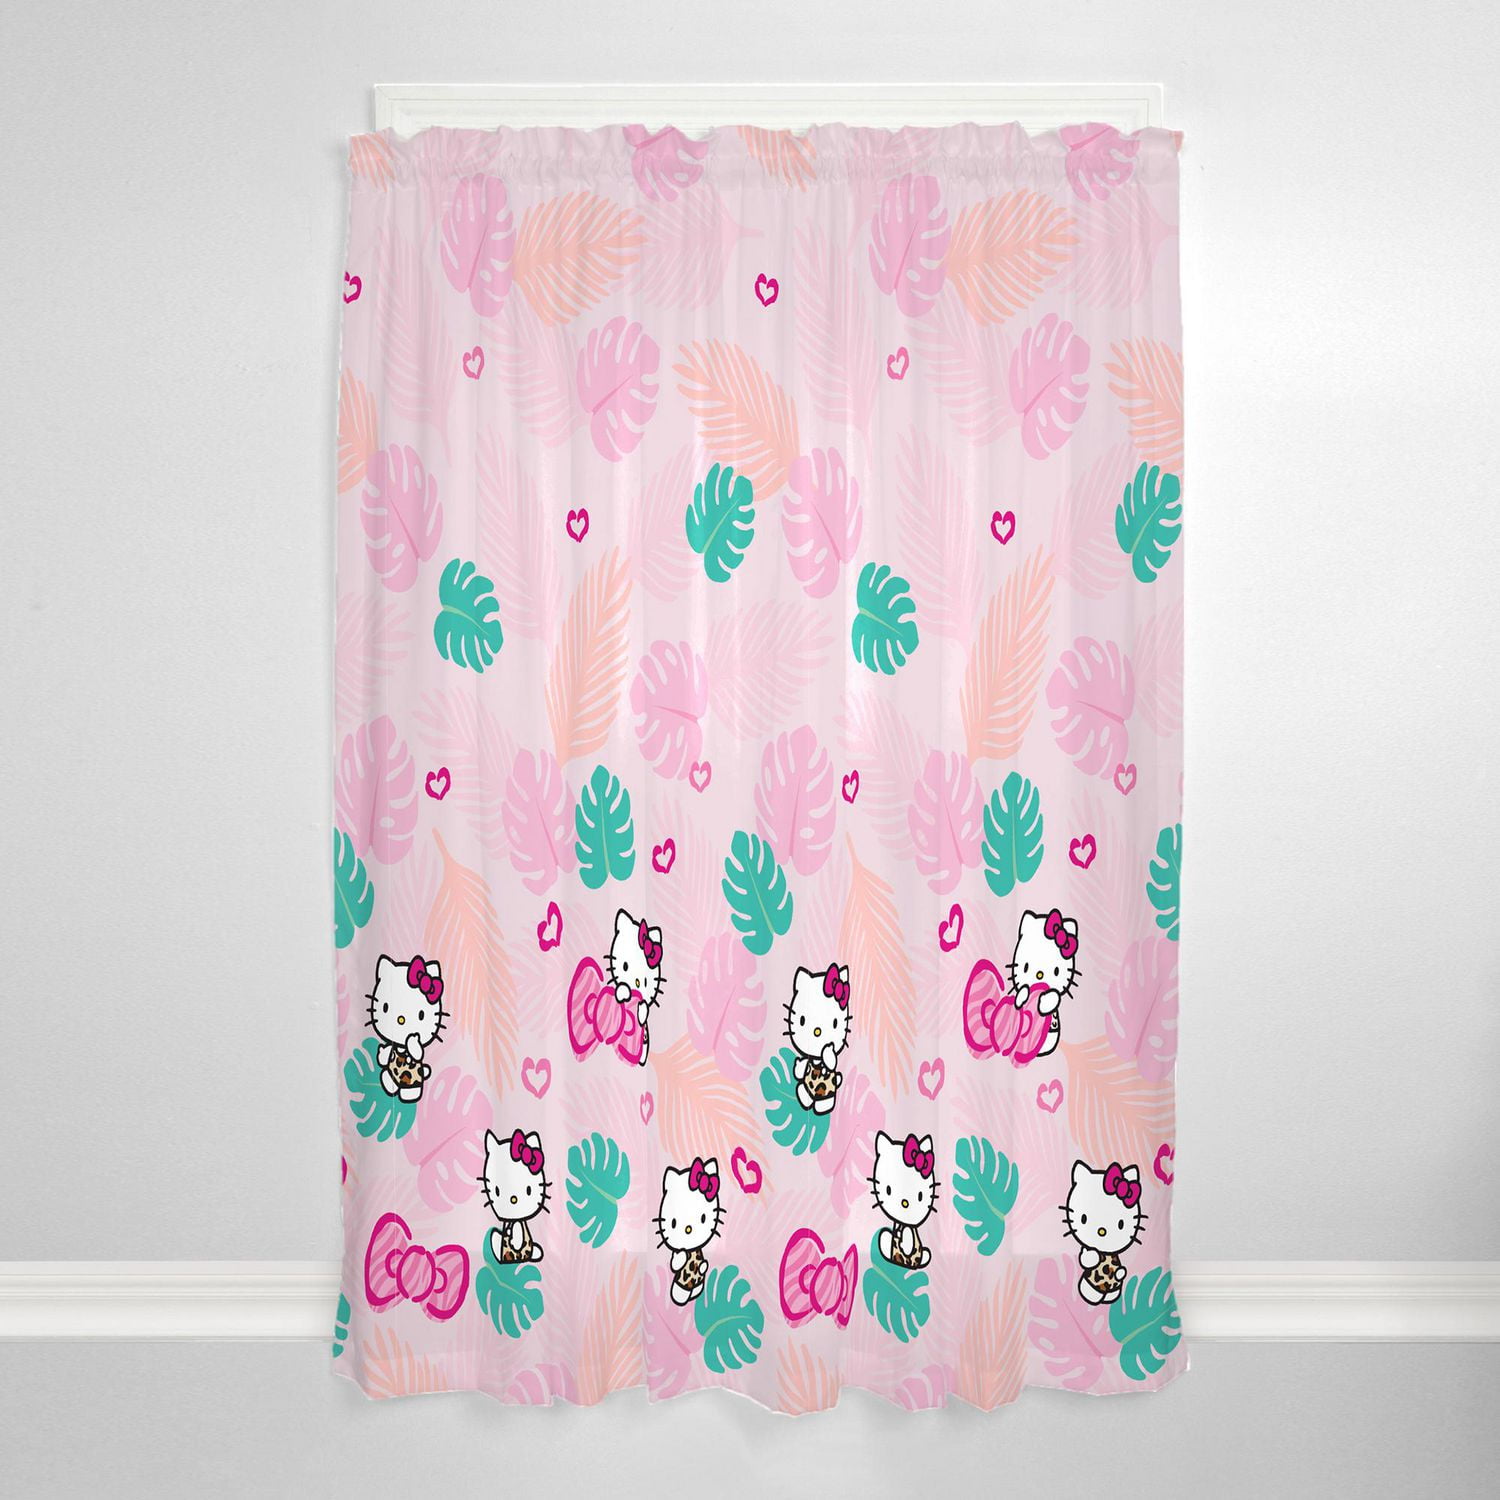 PINK Hello Kitty Shower Curtain Bath Mat Toilet Cover Rug Bathroom